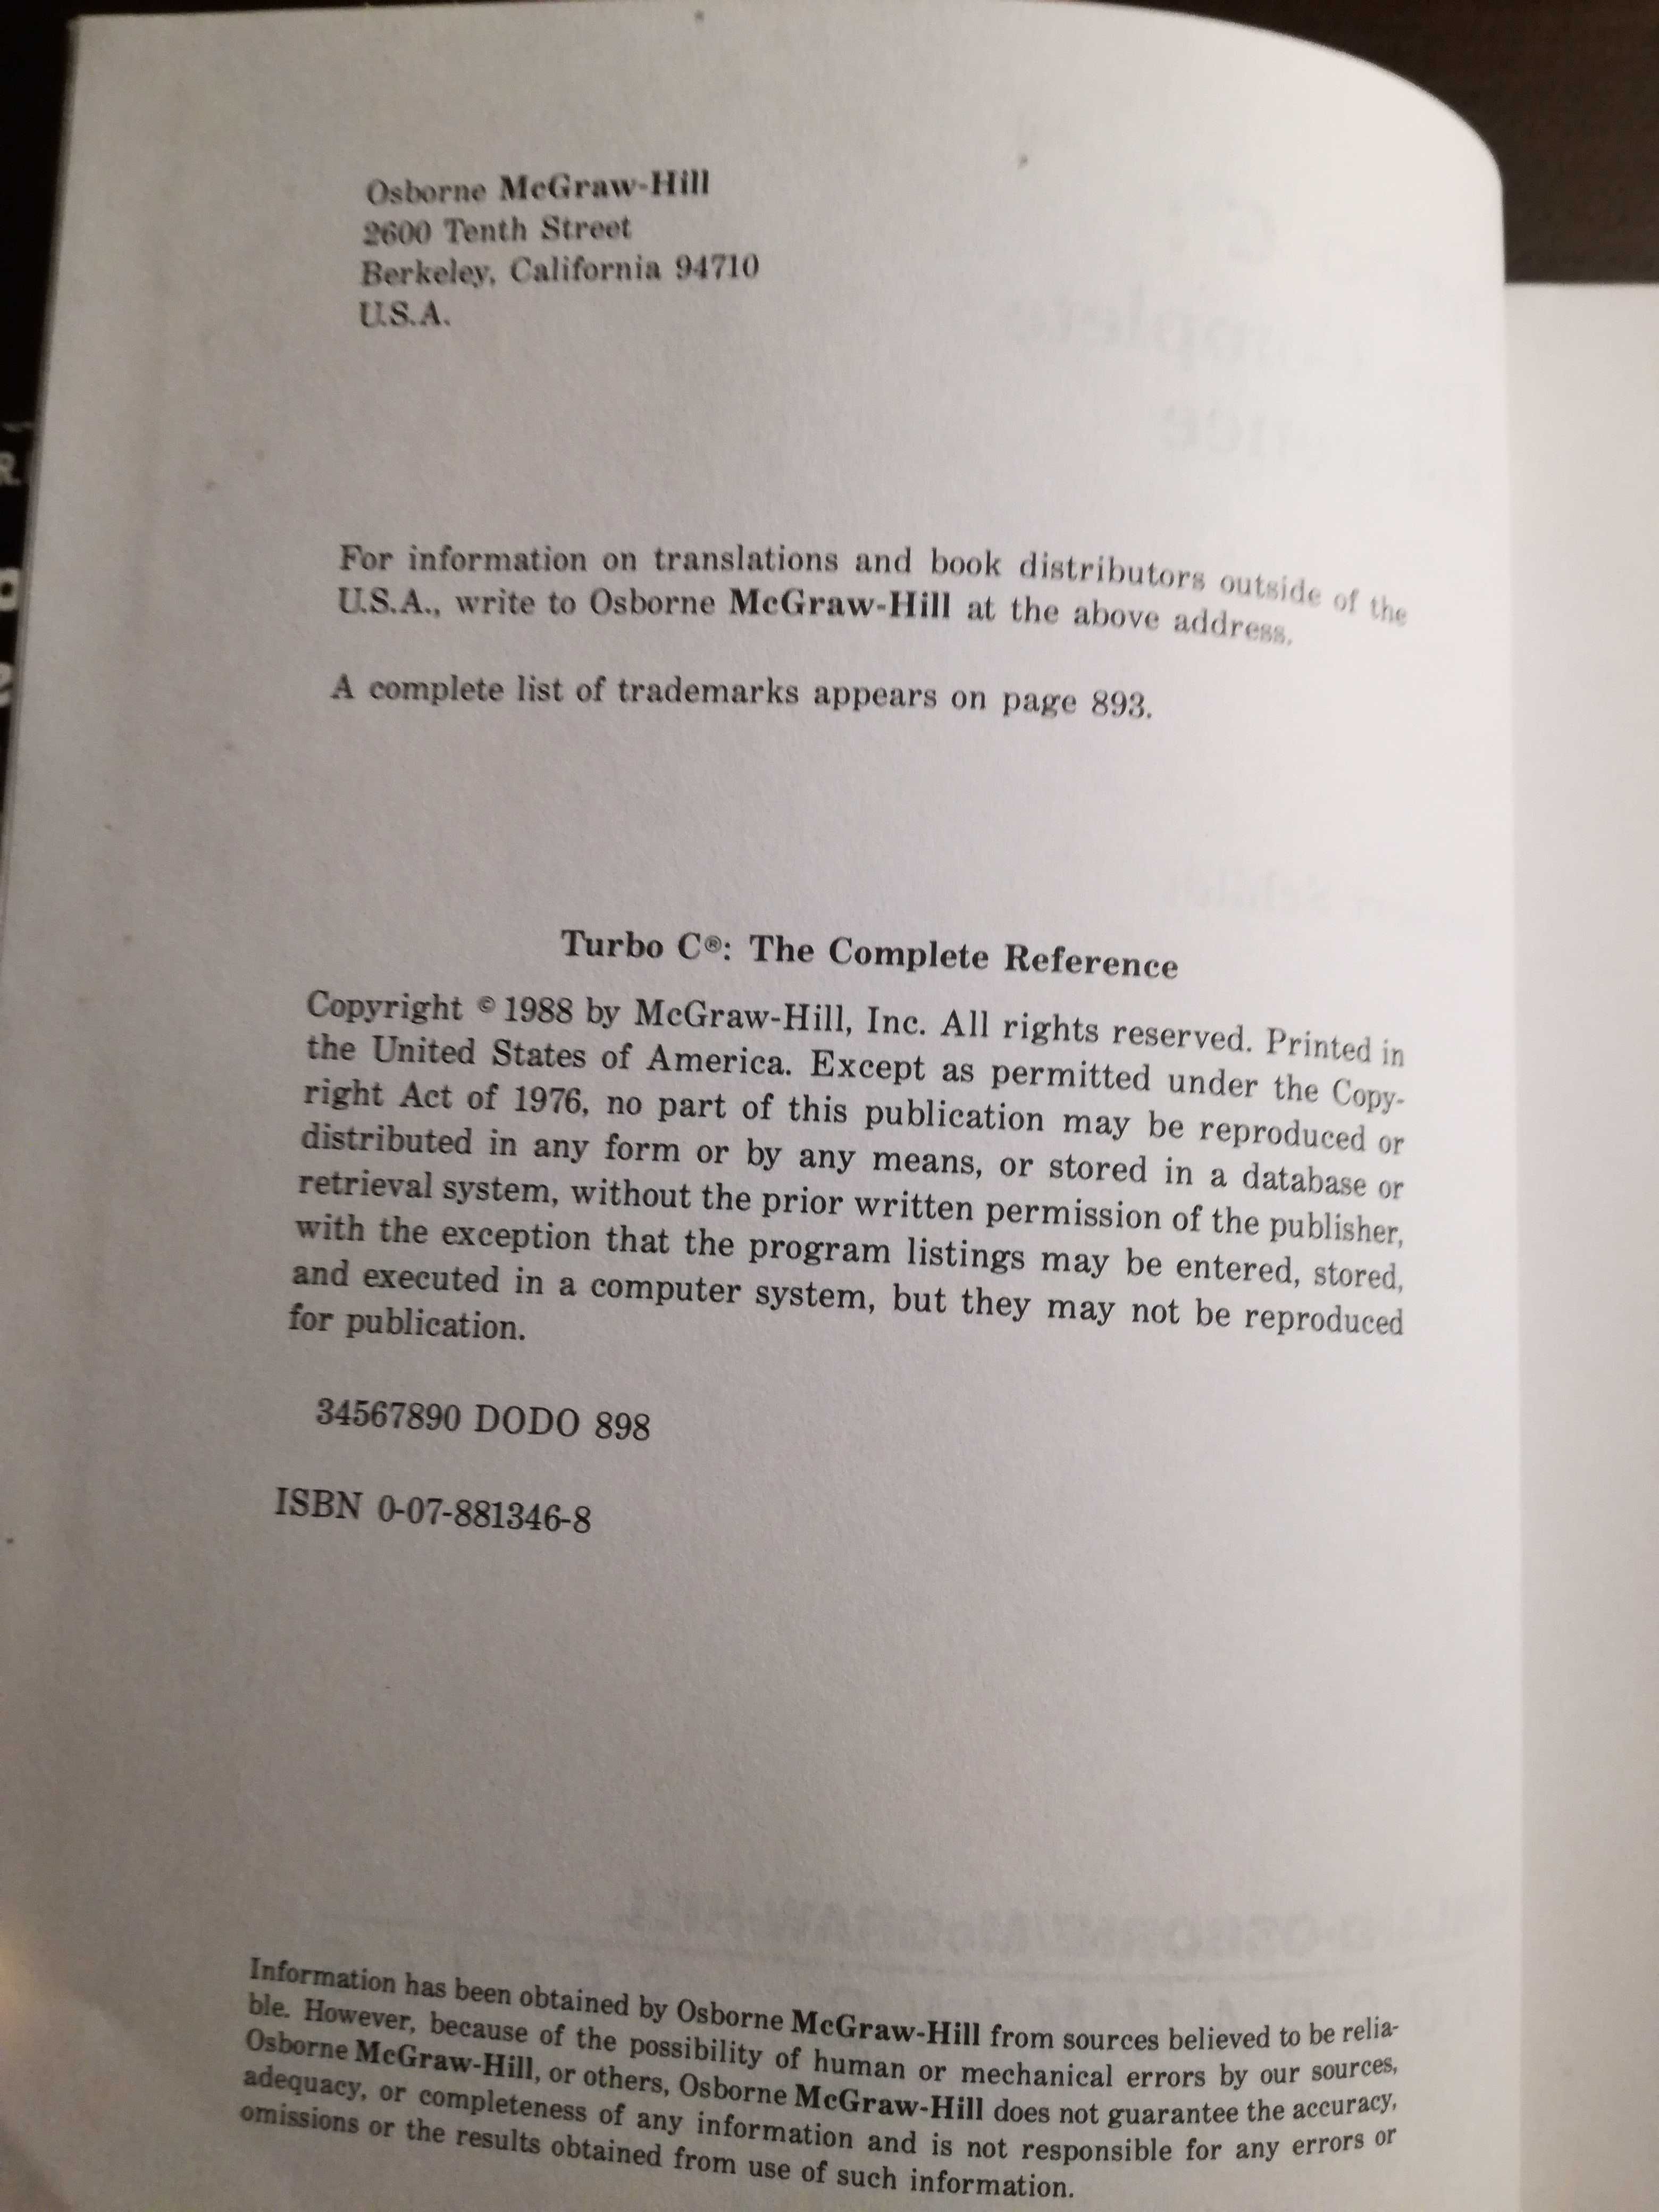 Turbo C - Herbert Schildt, ed. McGraw-Hill